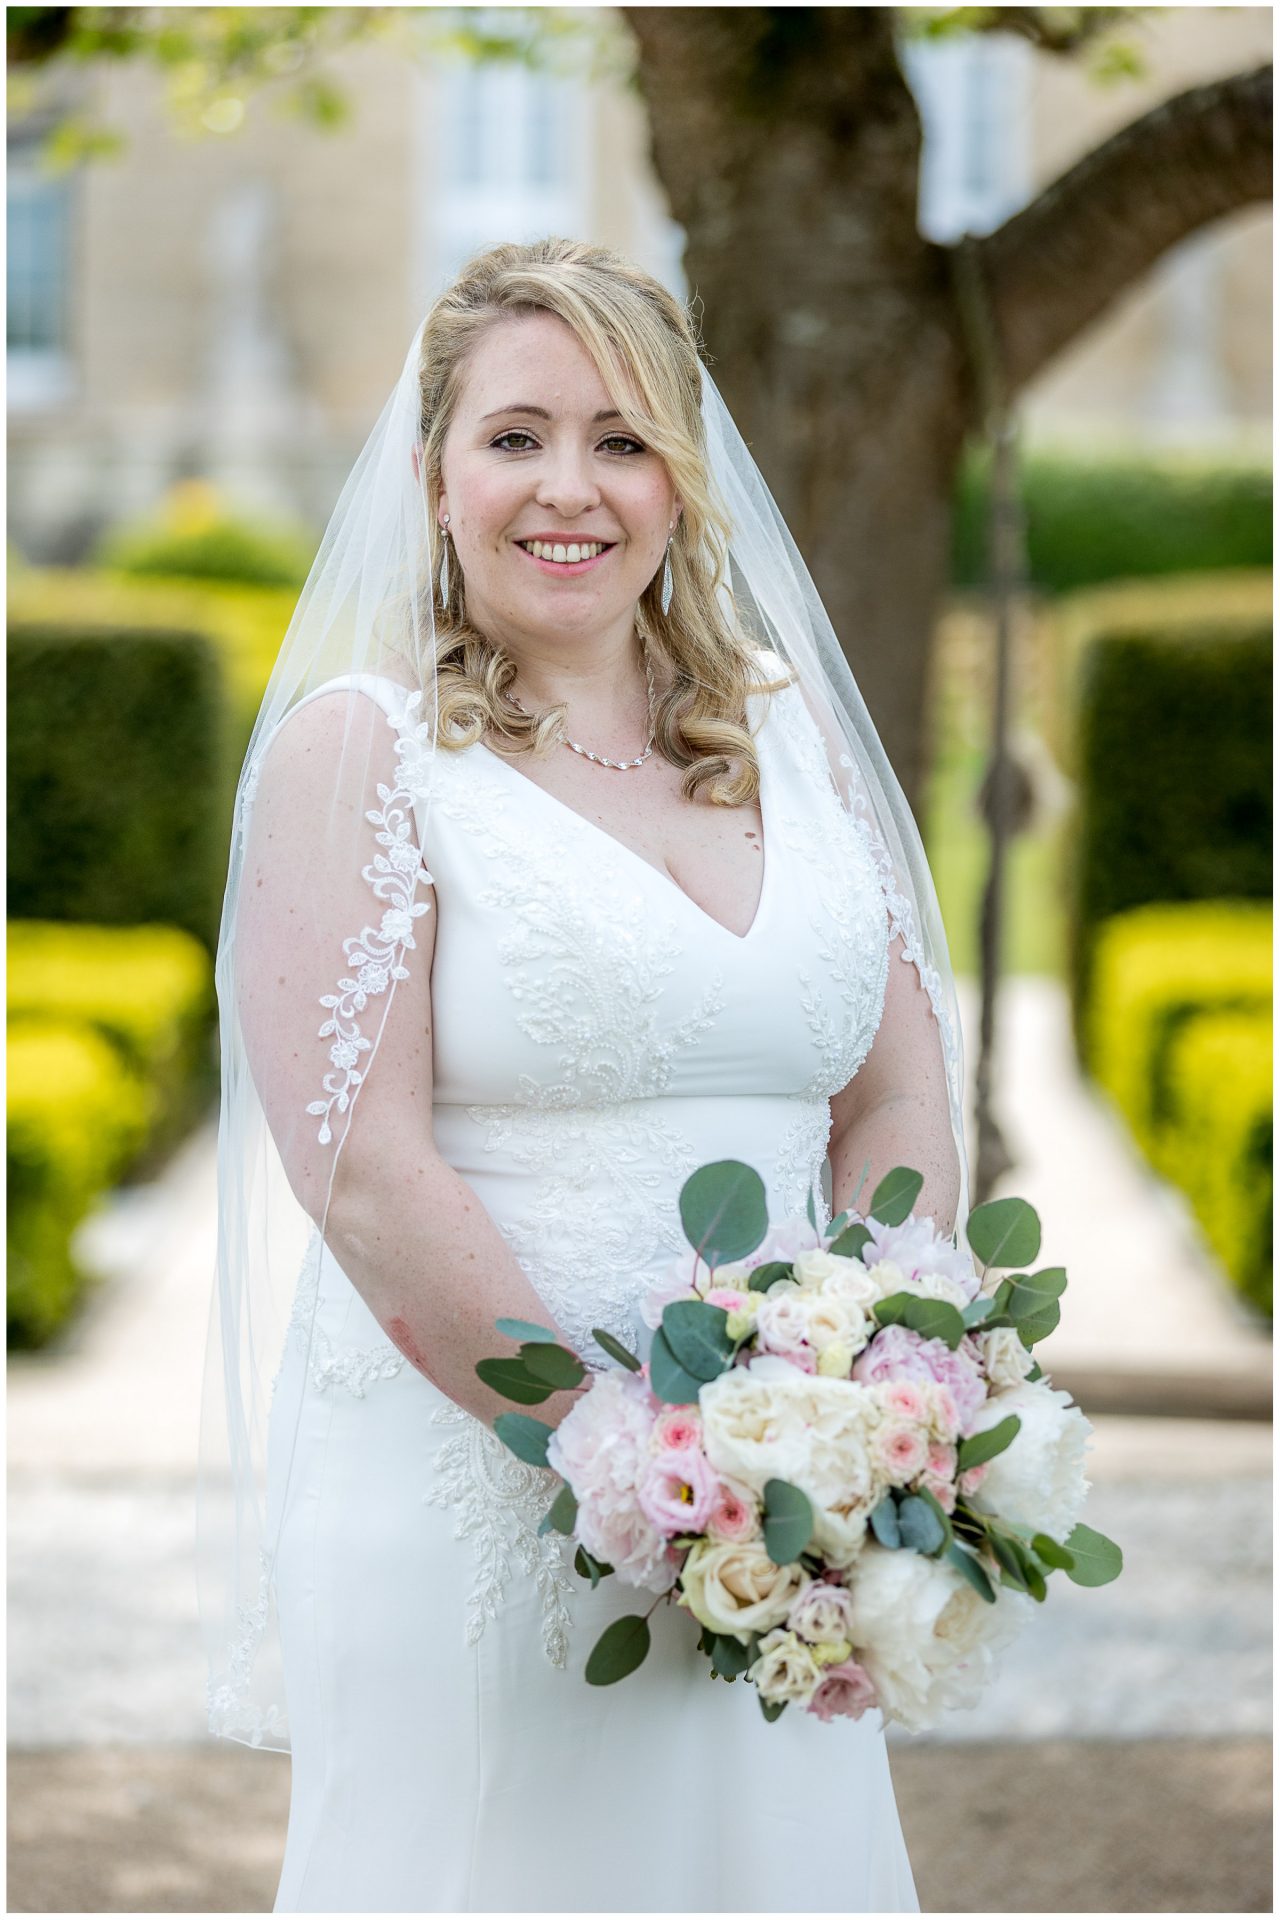 Colour portrait of bride in gardens of Hampshire wedding venue at Froyle Park